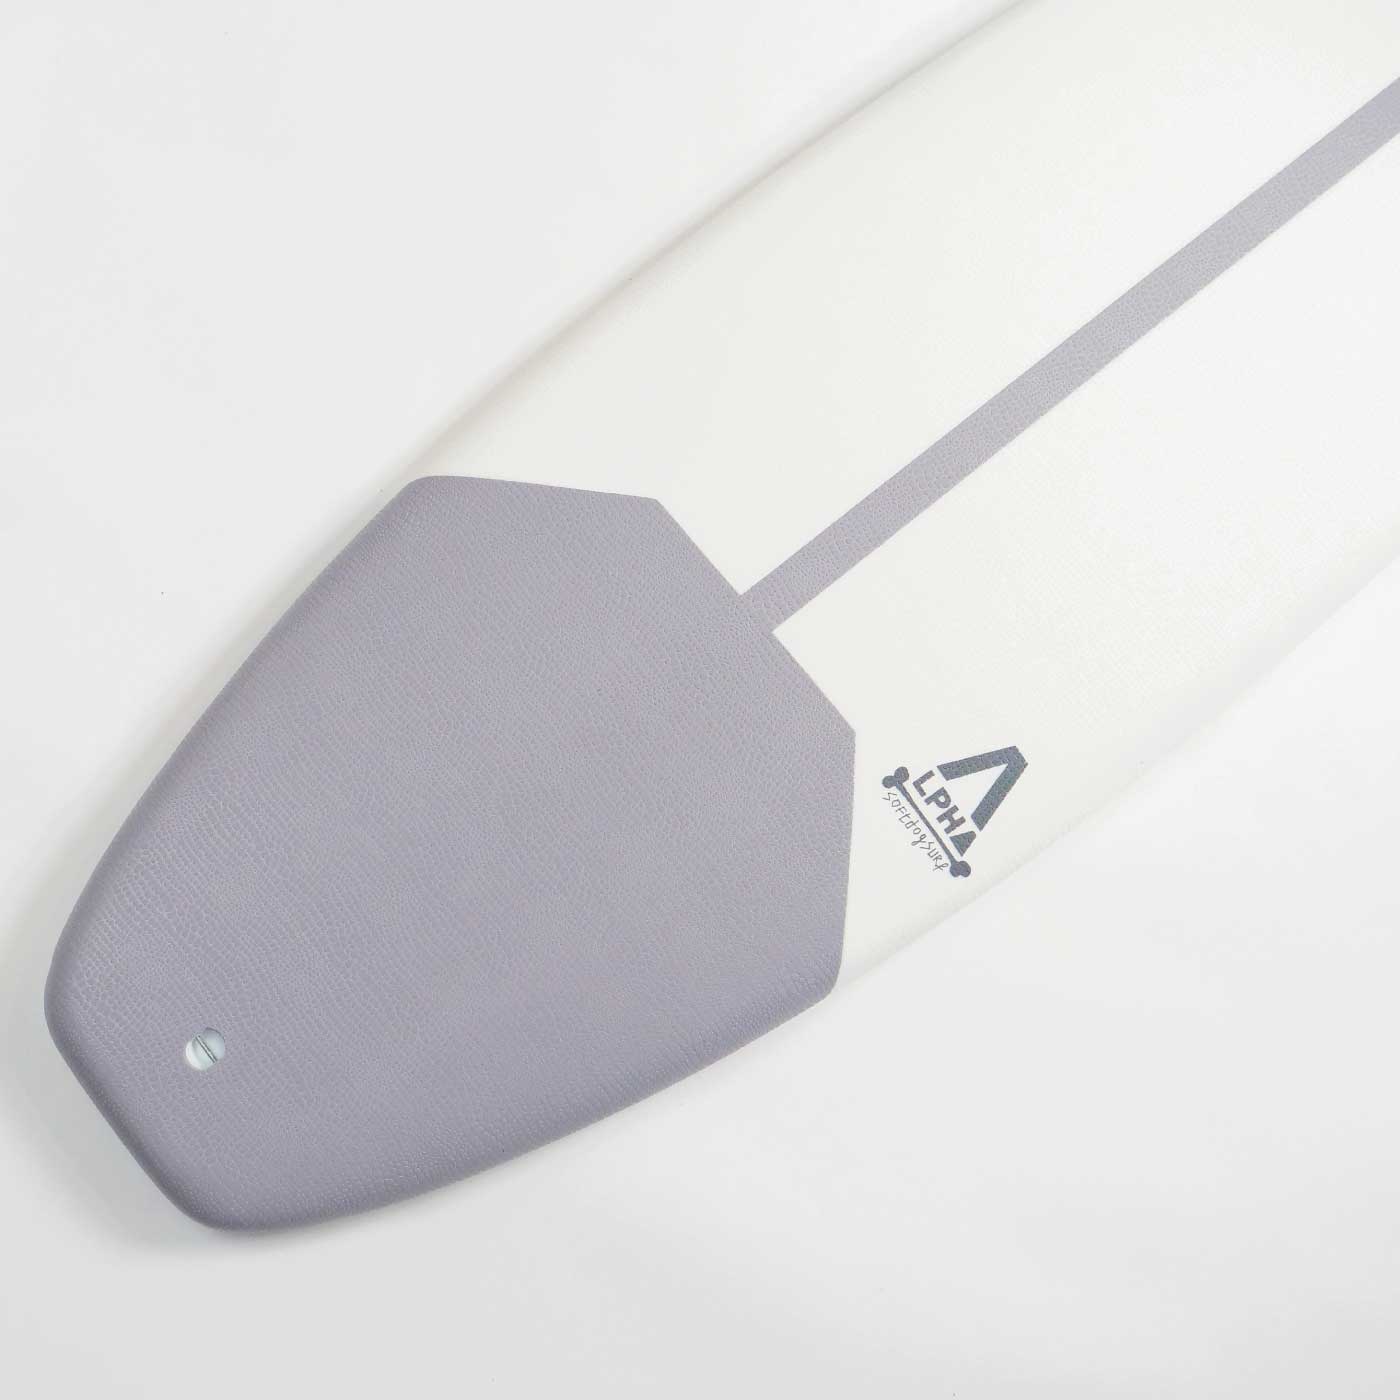 5’6 soft top high-performance surfboard tail grip design